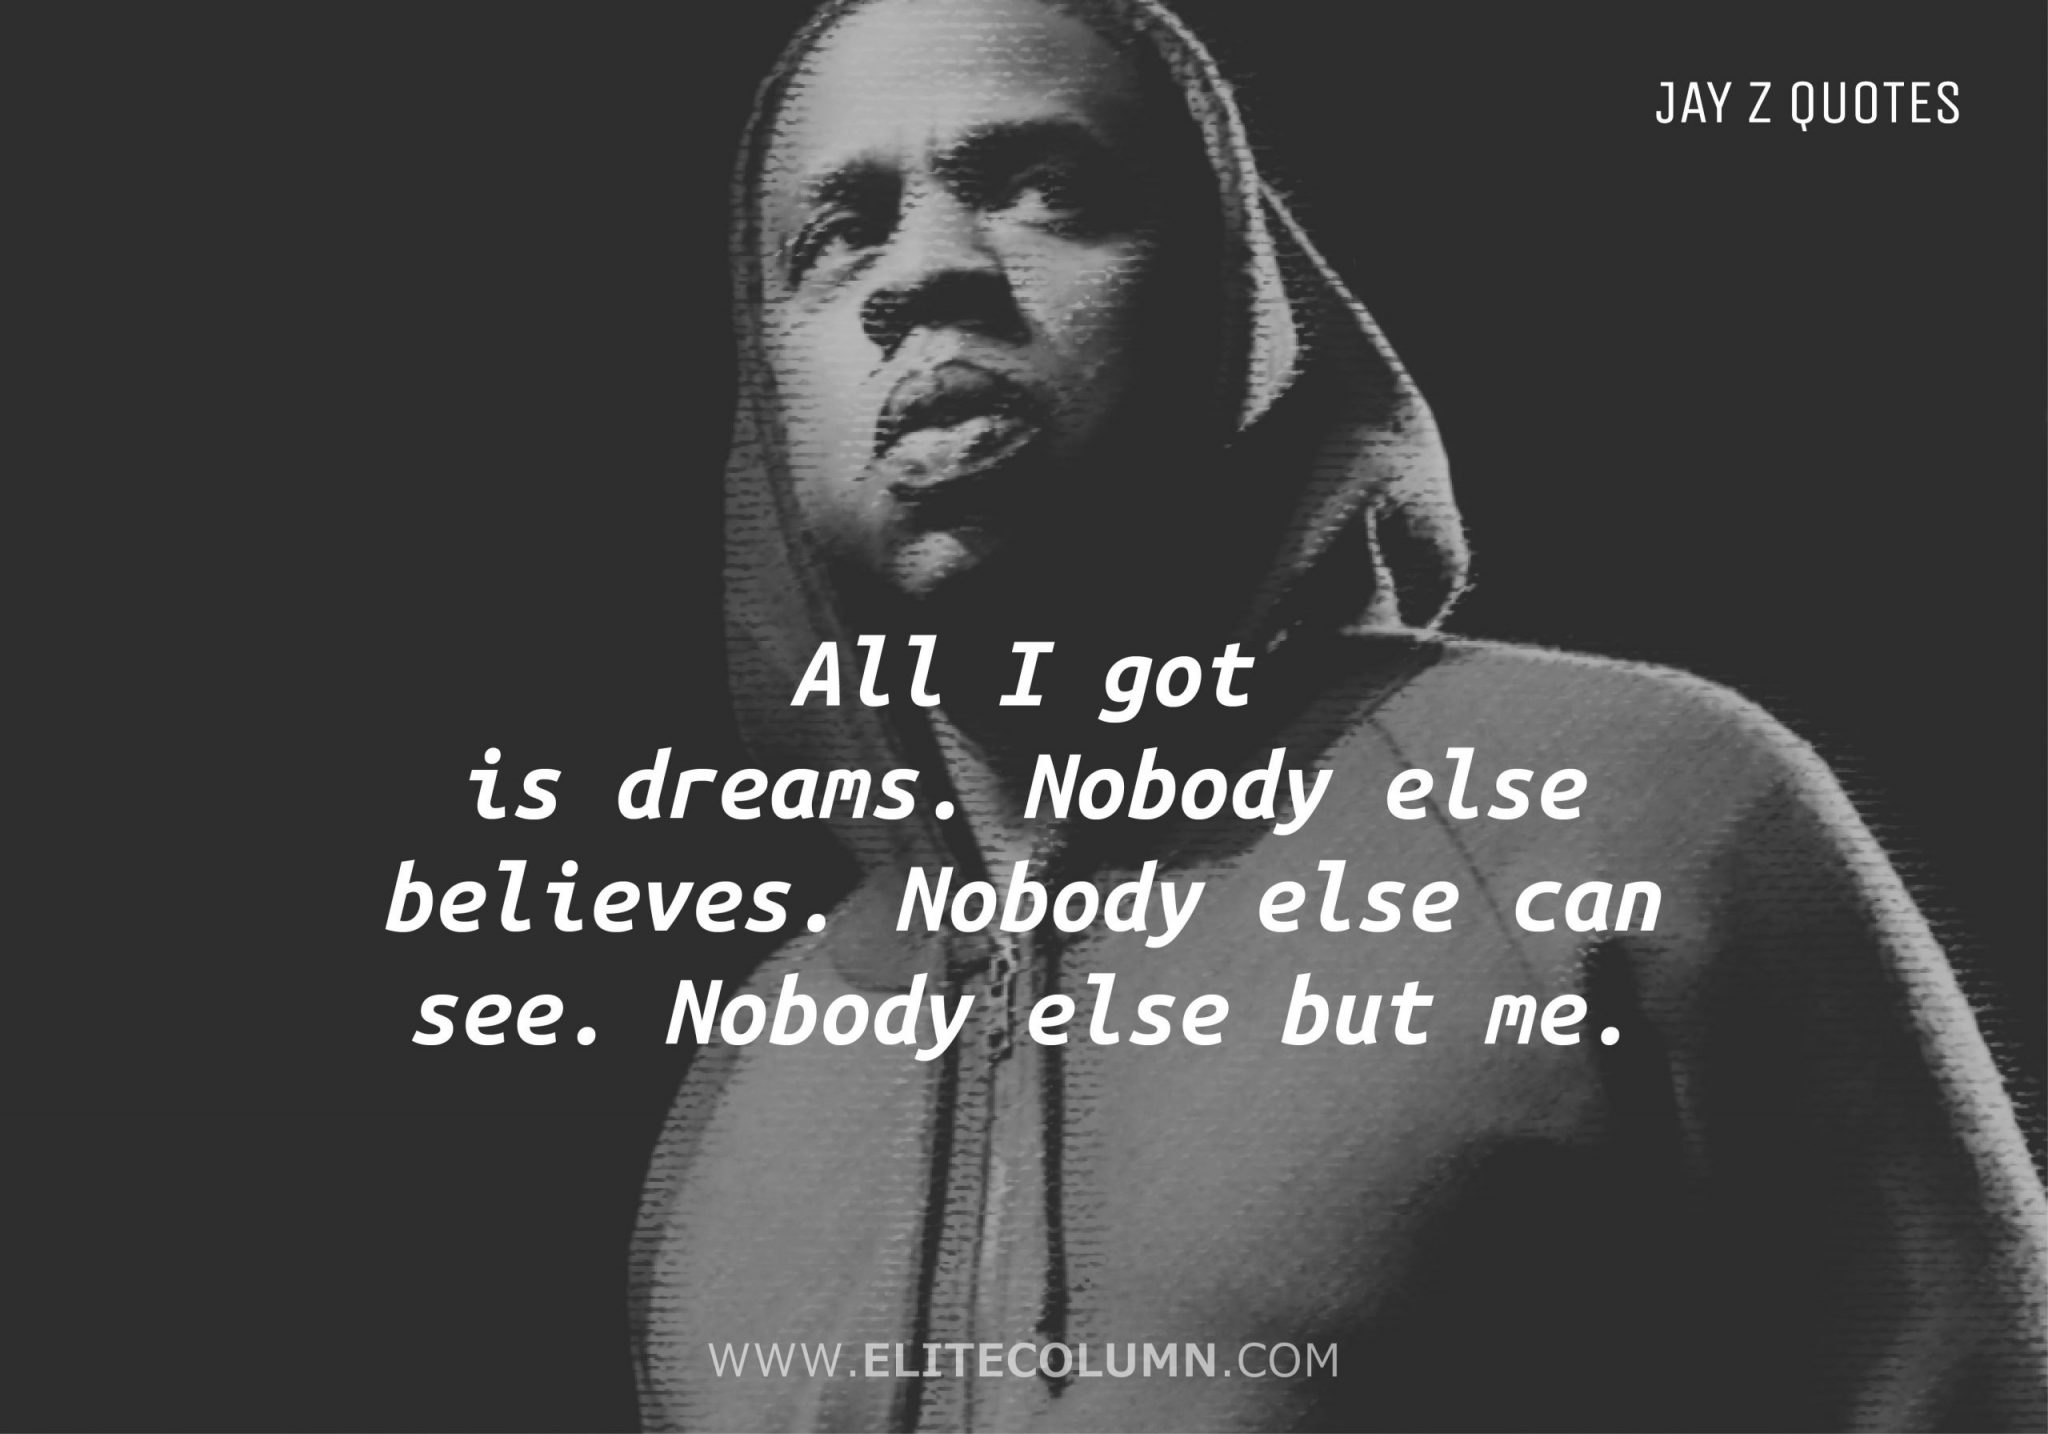 40 Jay Z Quotes That Will Motivate You 21 Elitecolumn